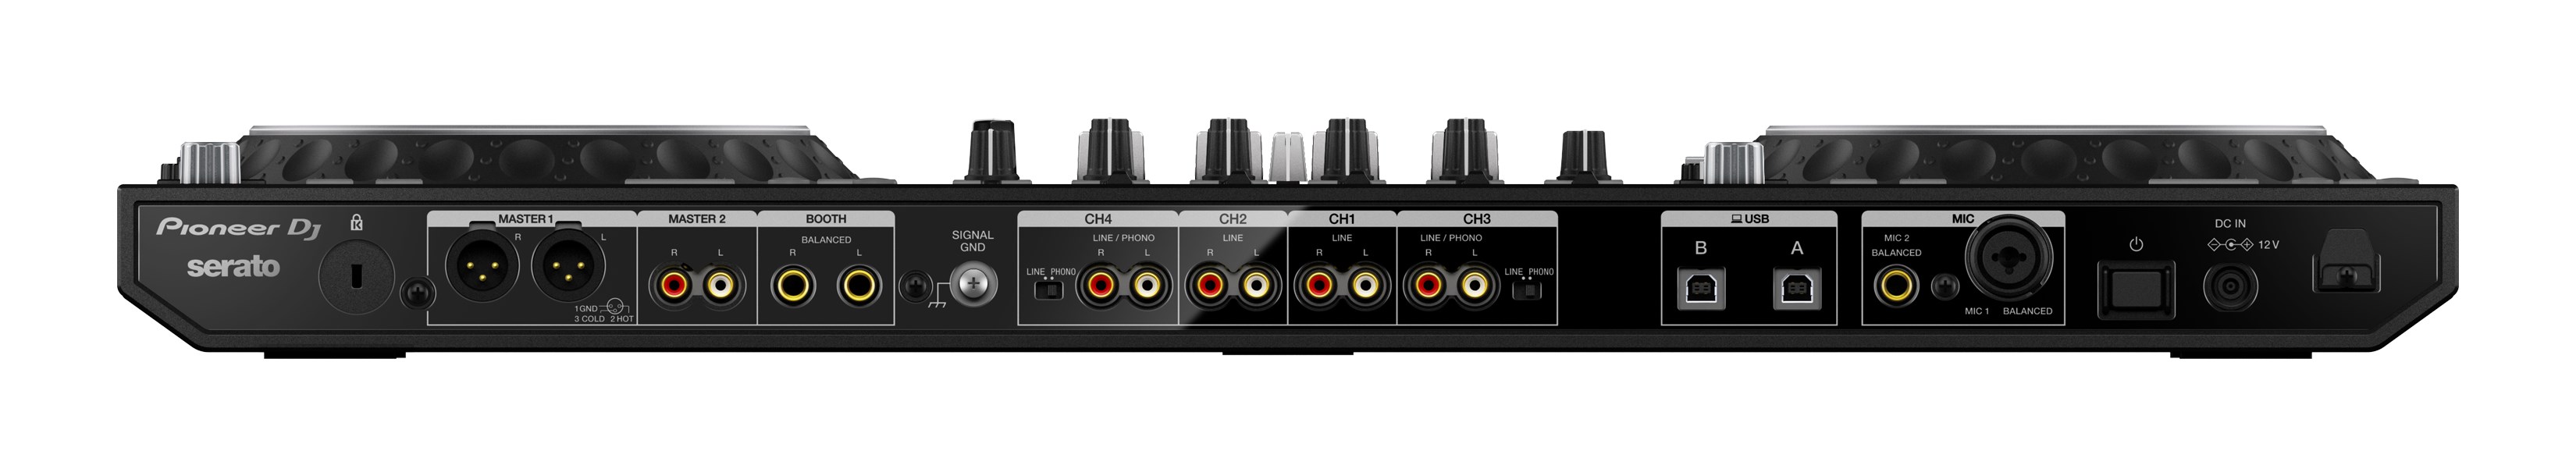 Pioneer Dj Ddj-1000srt - USB DJ controller - Variation 3